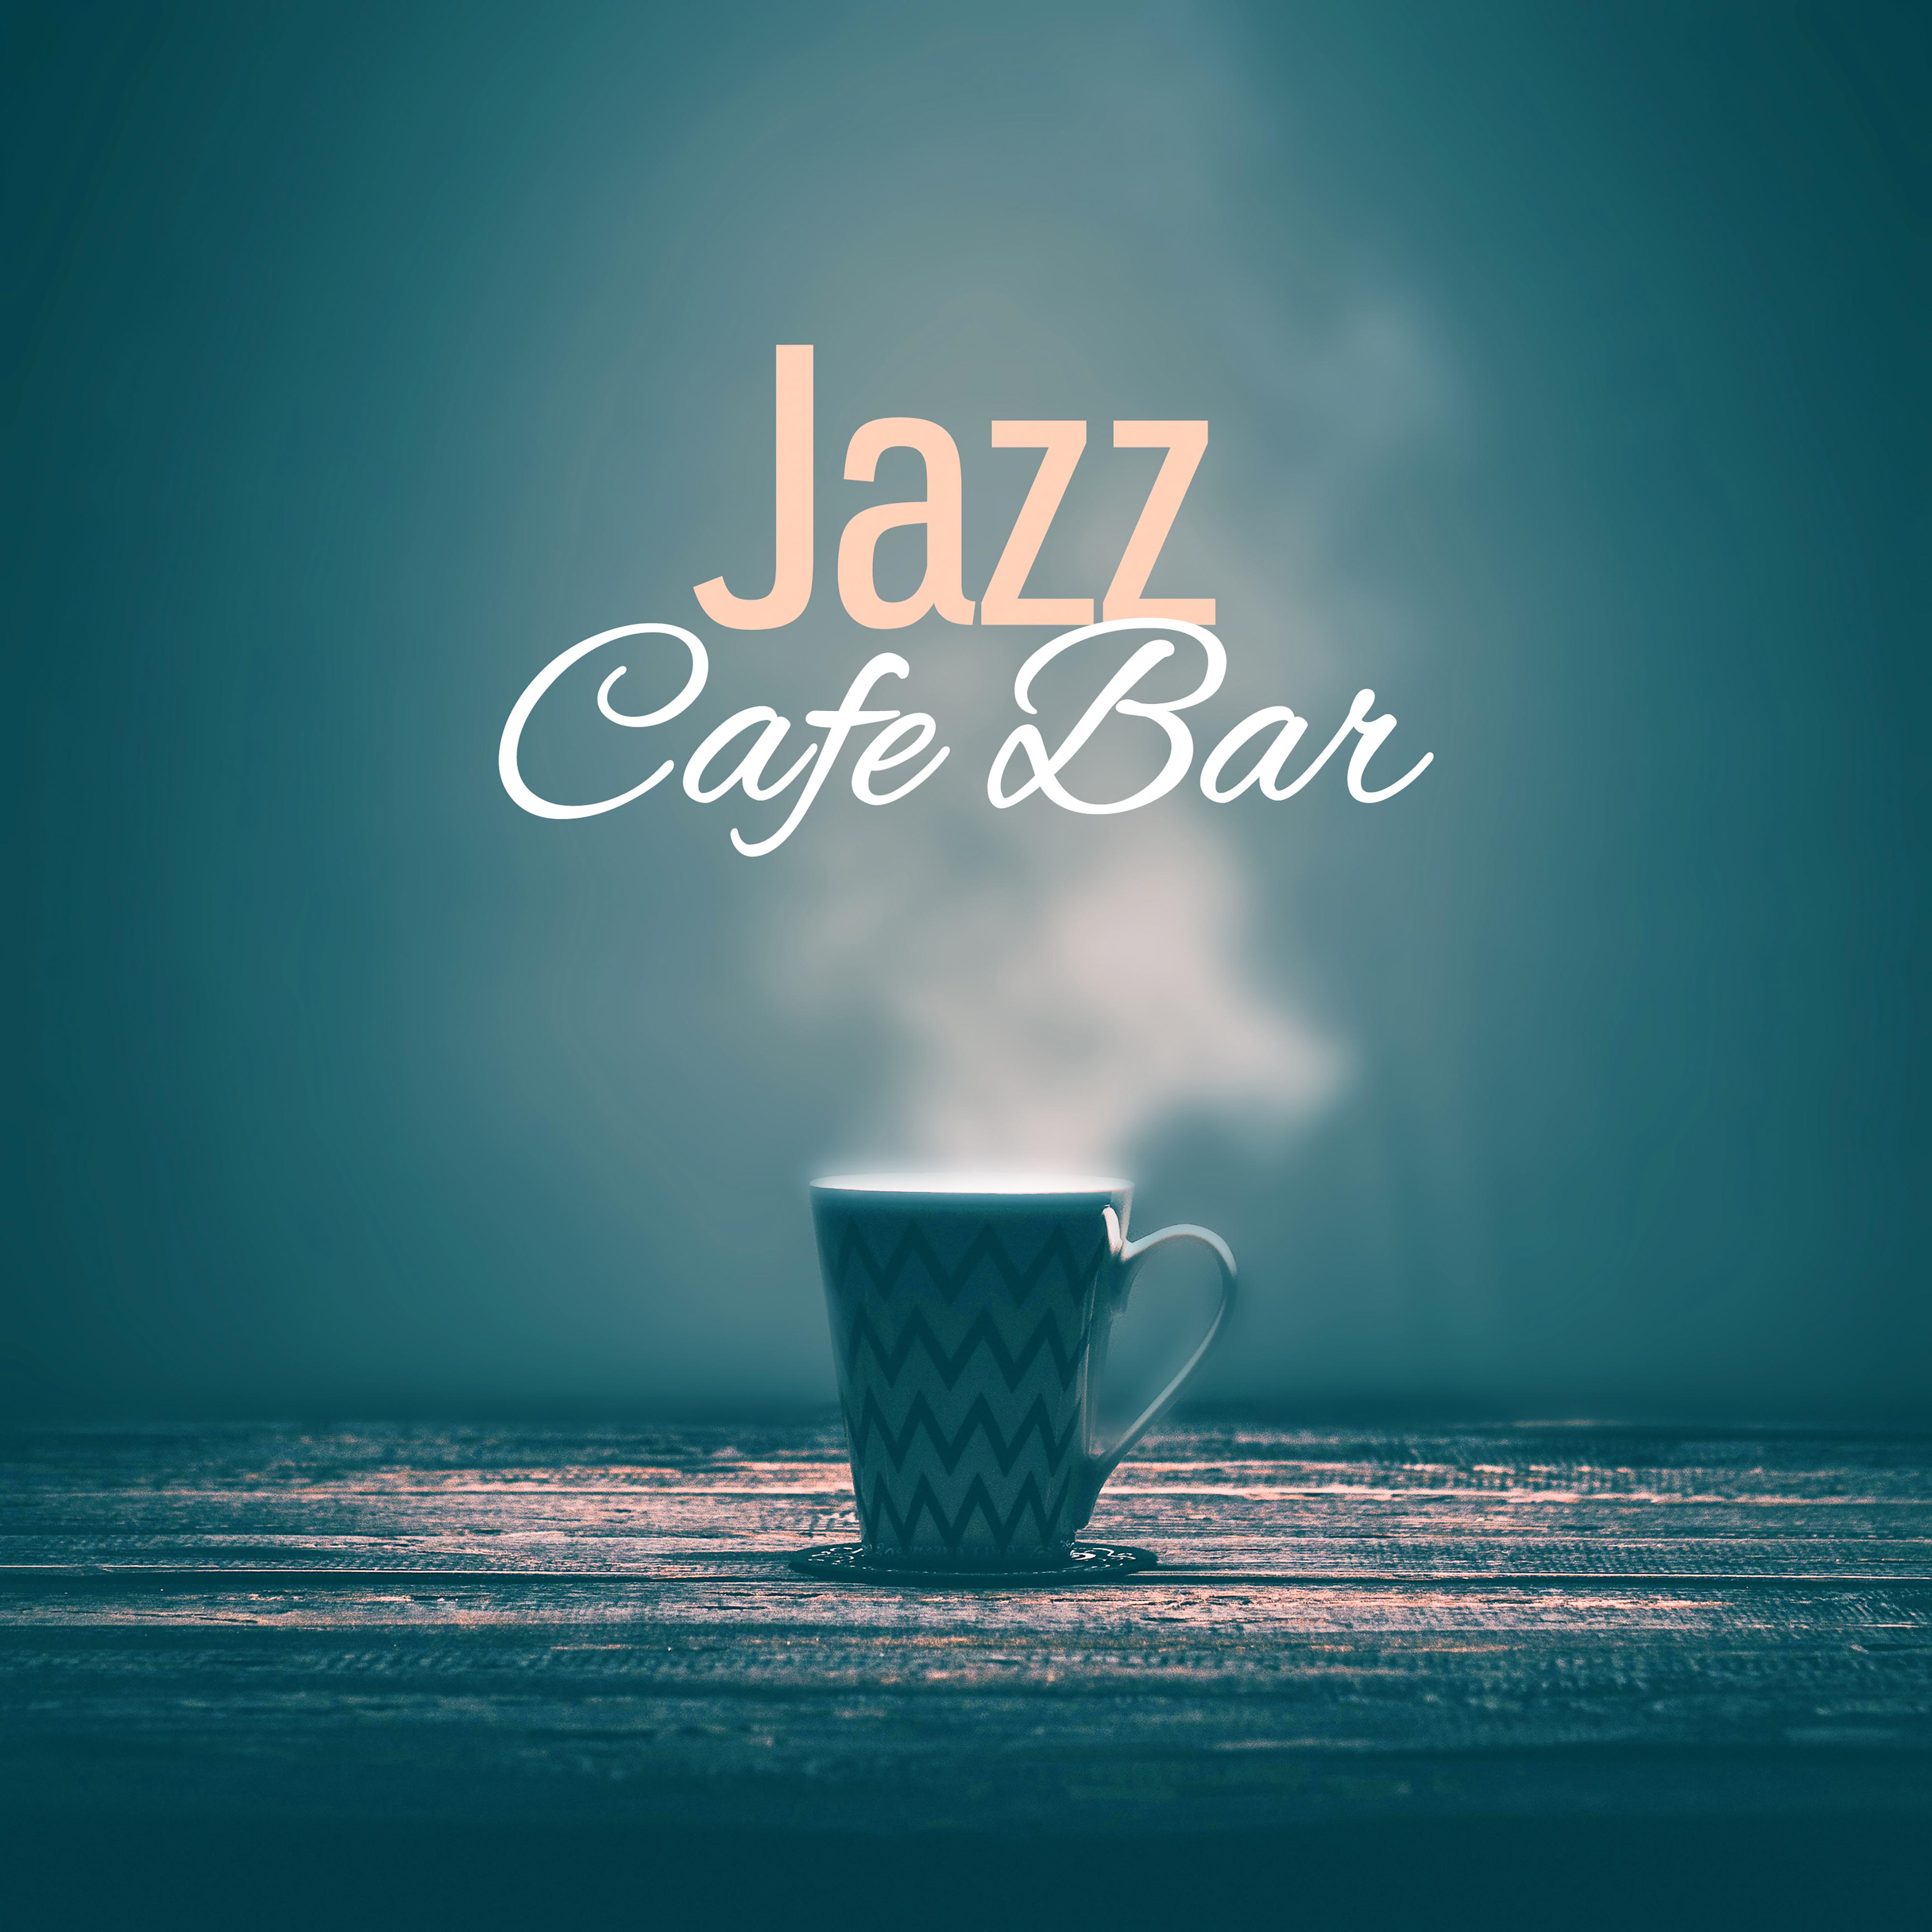 Jazz Cafe Bar – Jazz 2017, Relaxed Jazz, Smooth Piano, New Instrumental Music